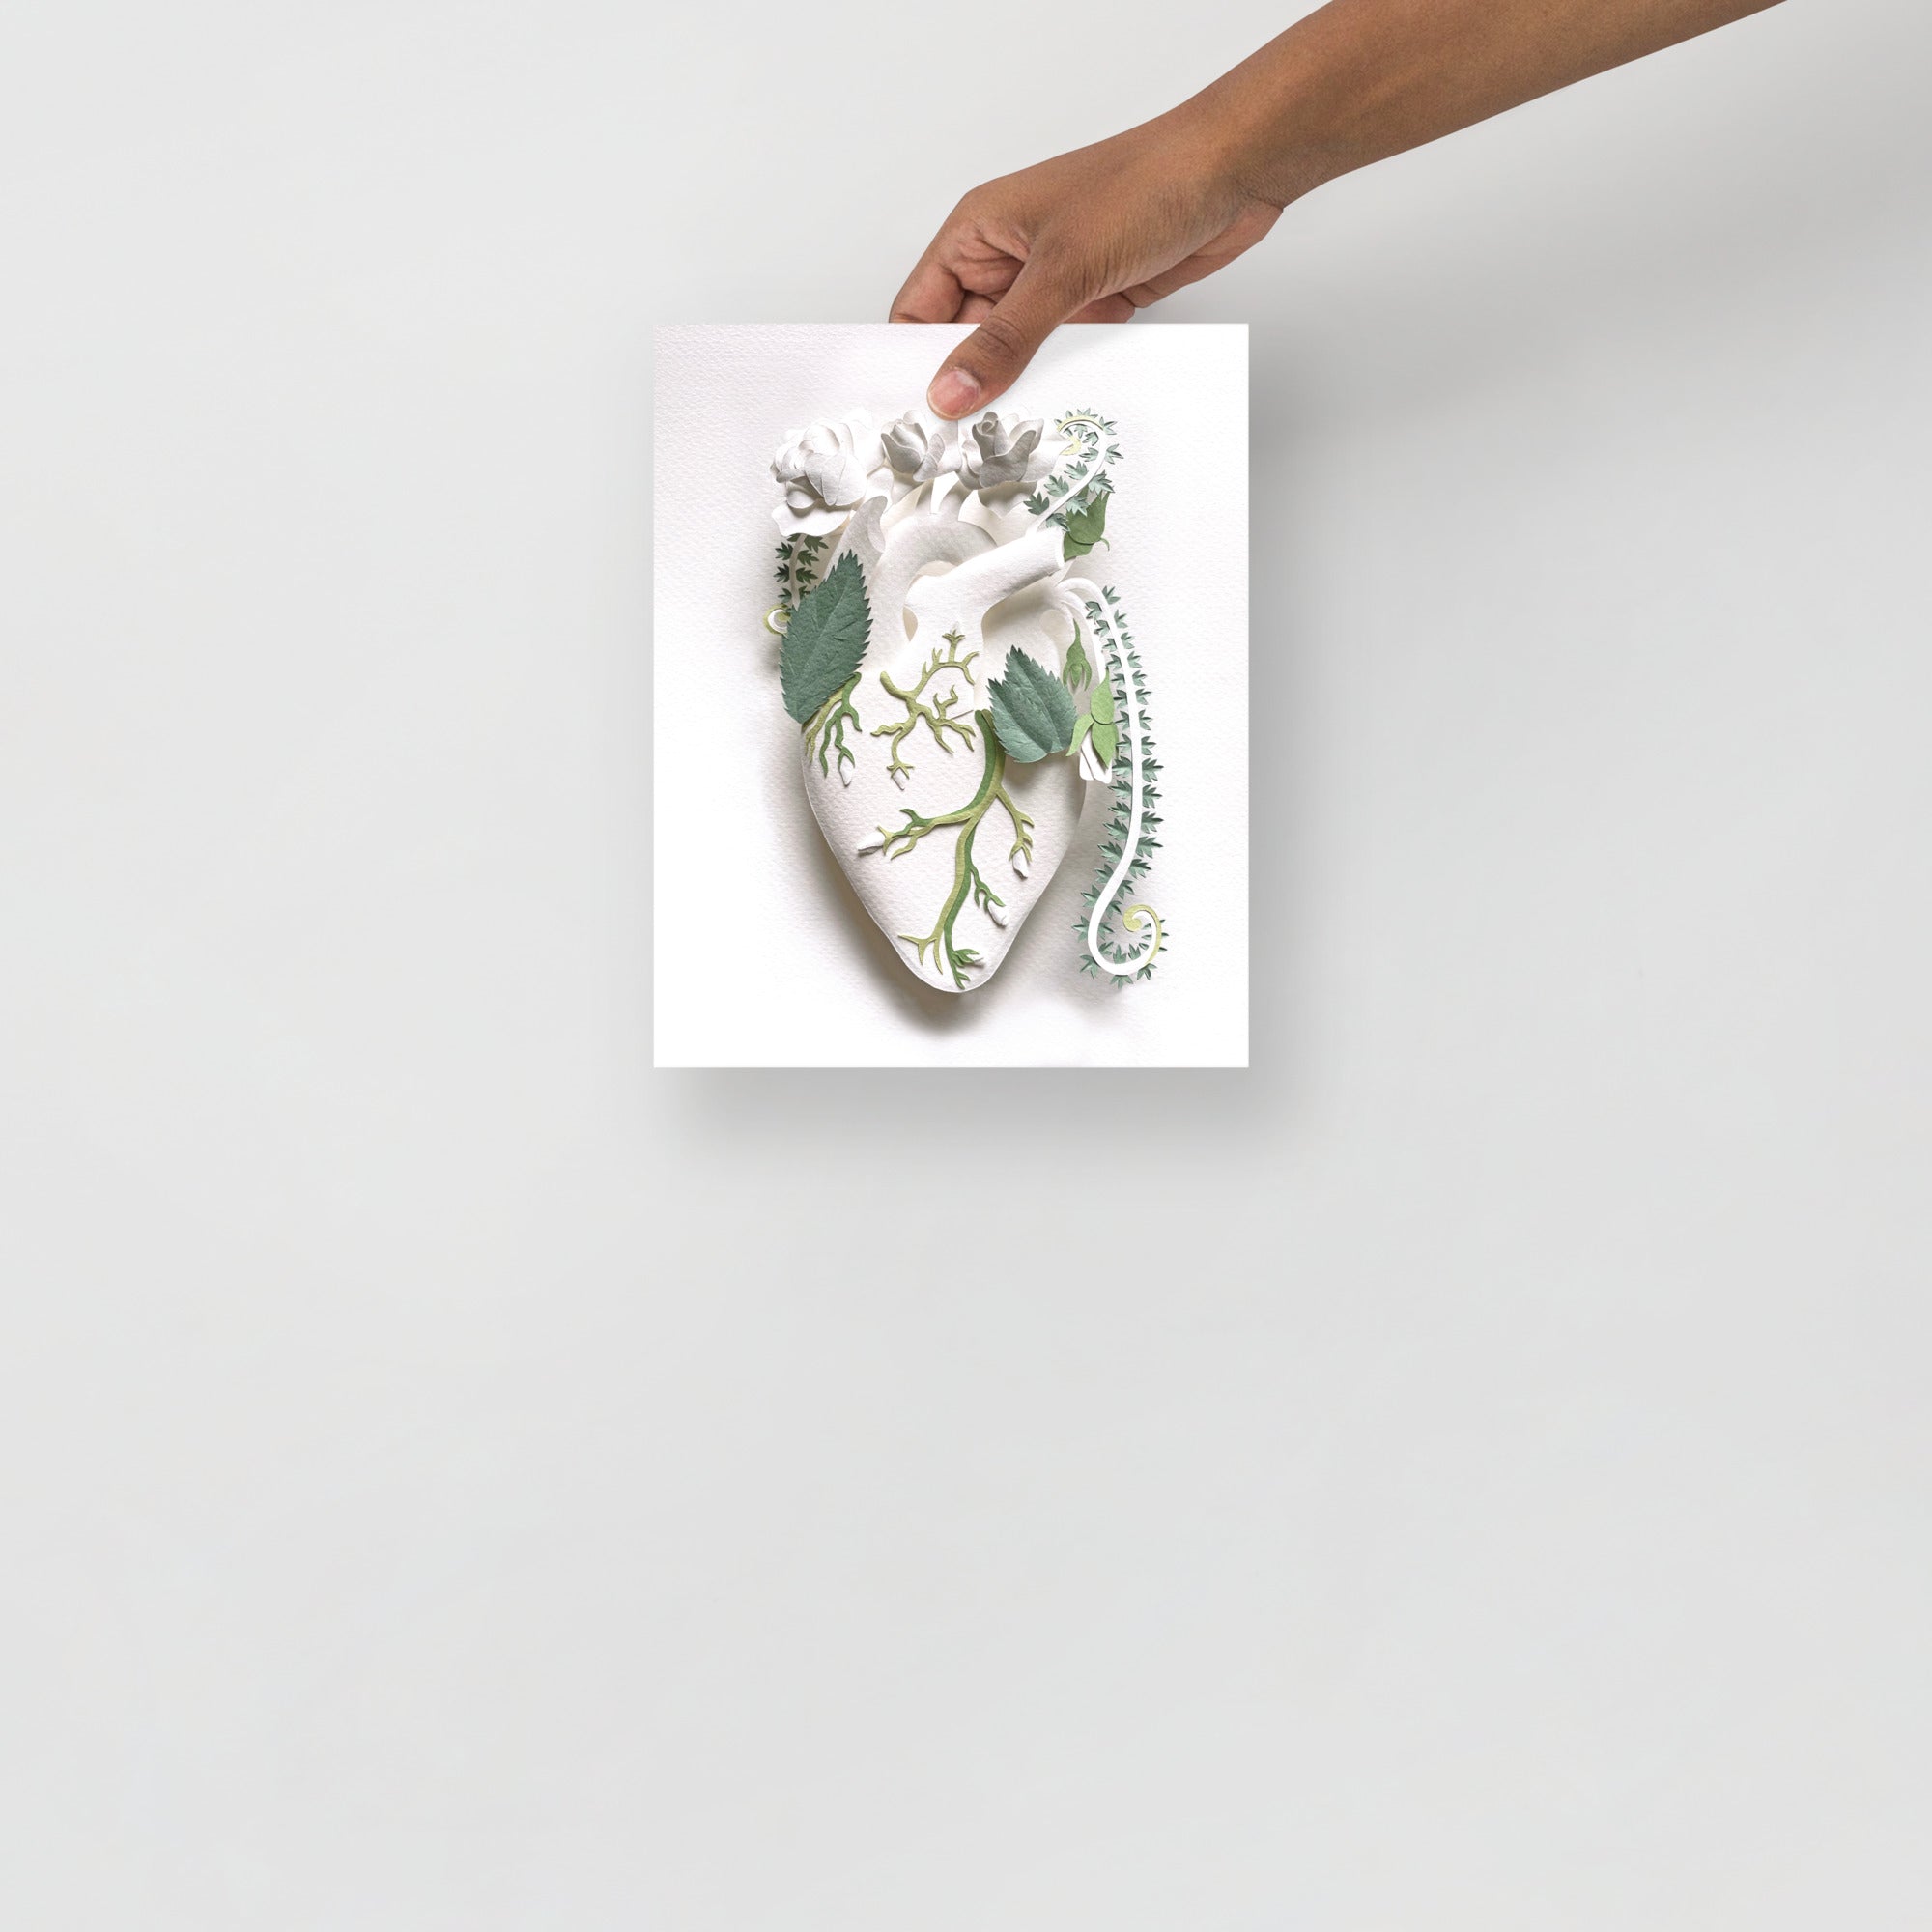 Healing Heart: Roses 8" x 10" print